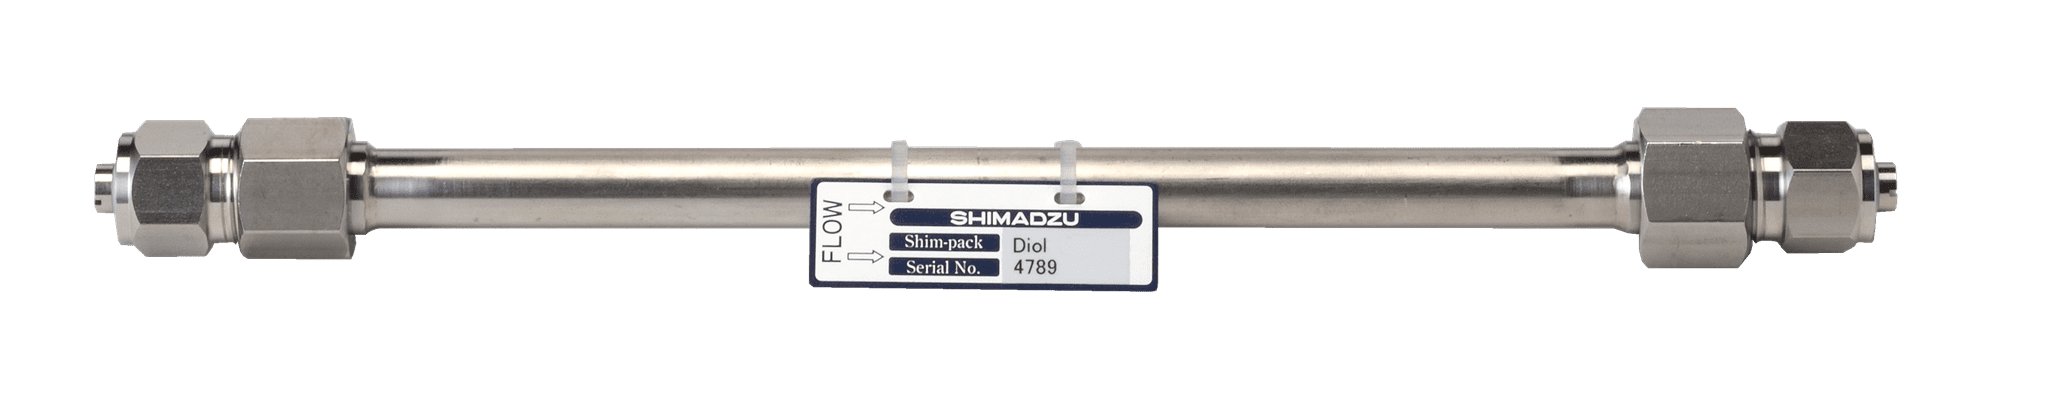 Obrázek Shim-pack Diol-300; 5 µm; 250 x 7.9